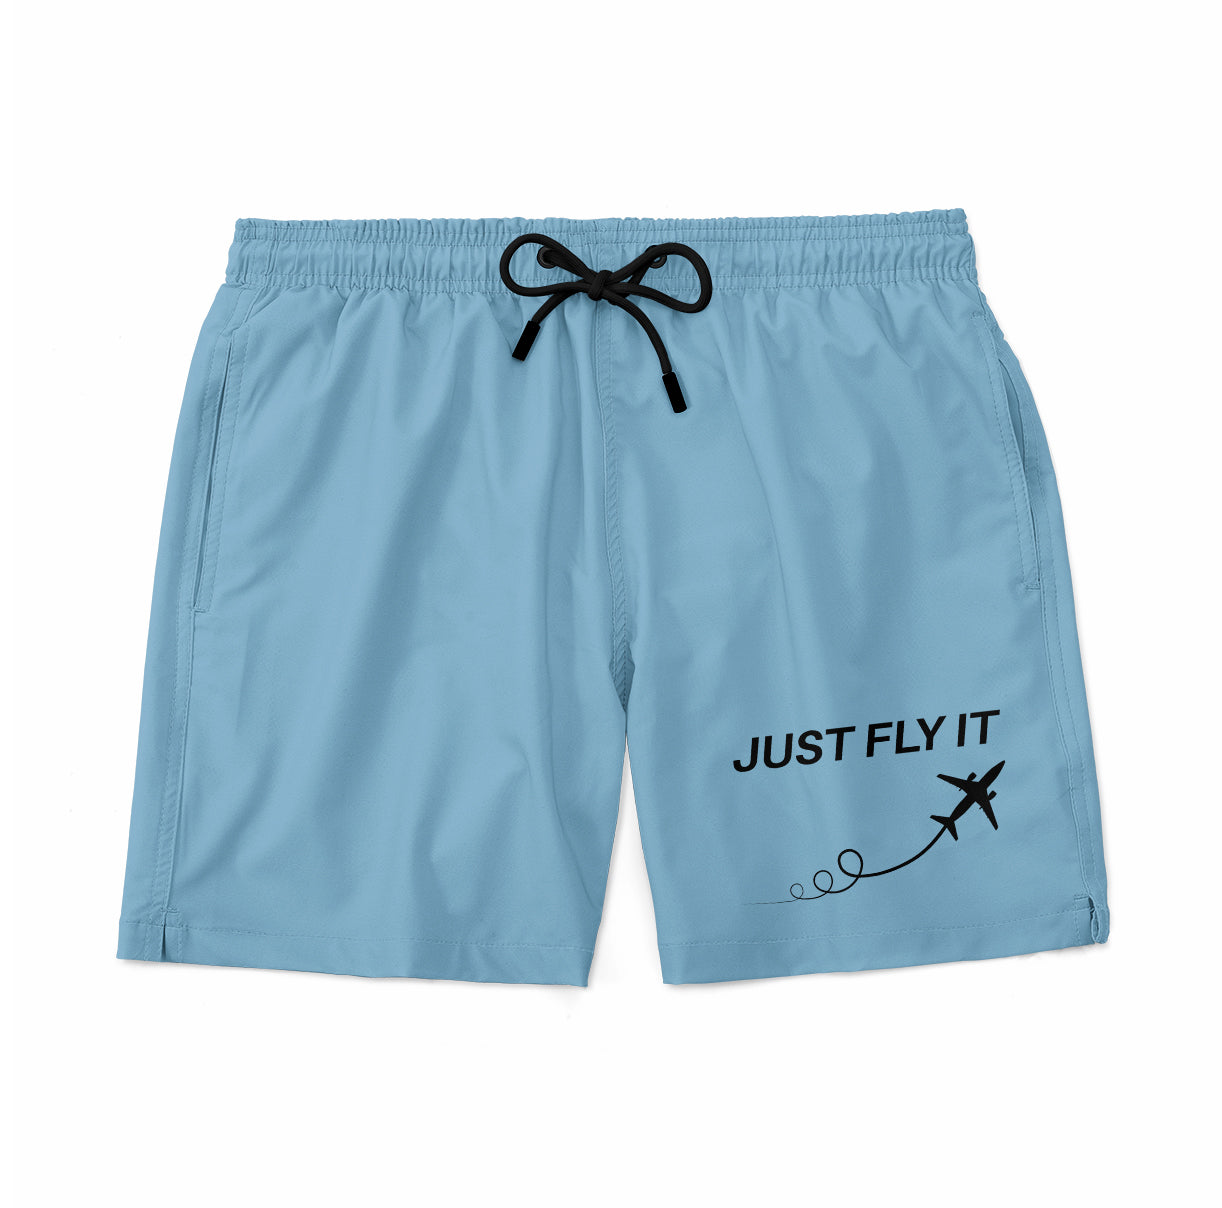 Just Fly It Designed Swim Trunks & Shorts